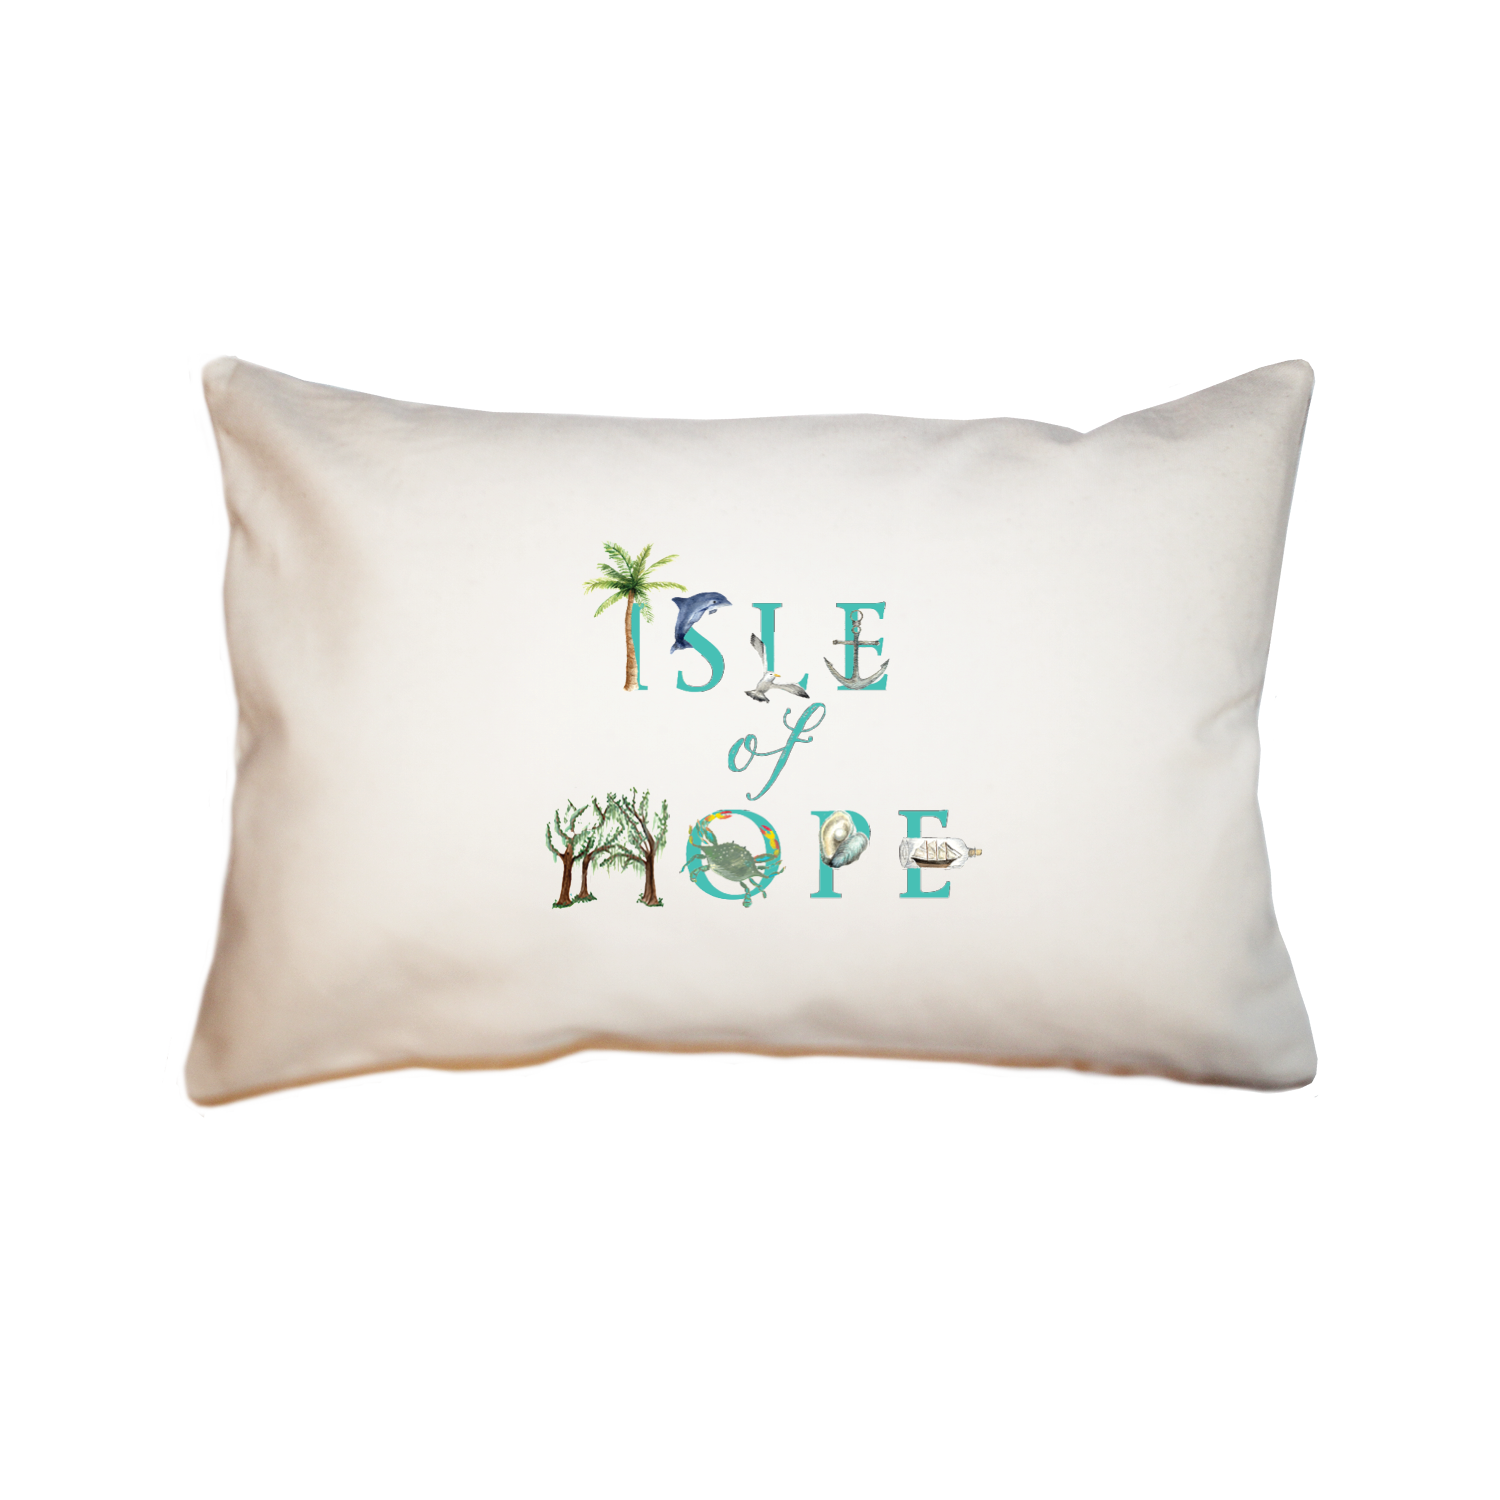 Isle of Hope large rectangle pillow